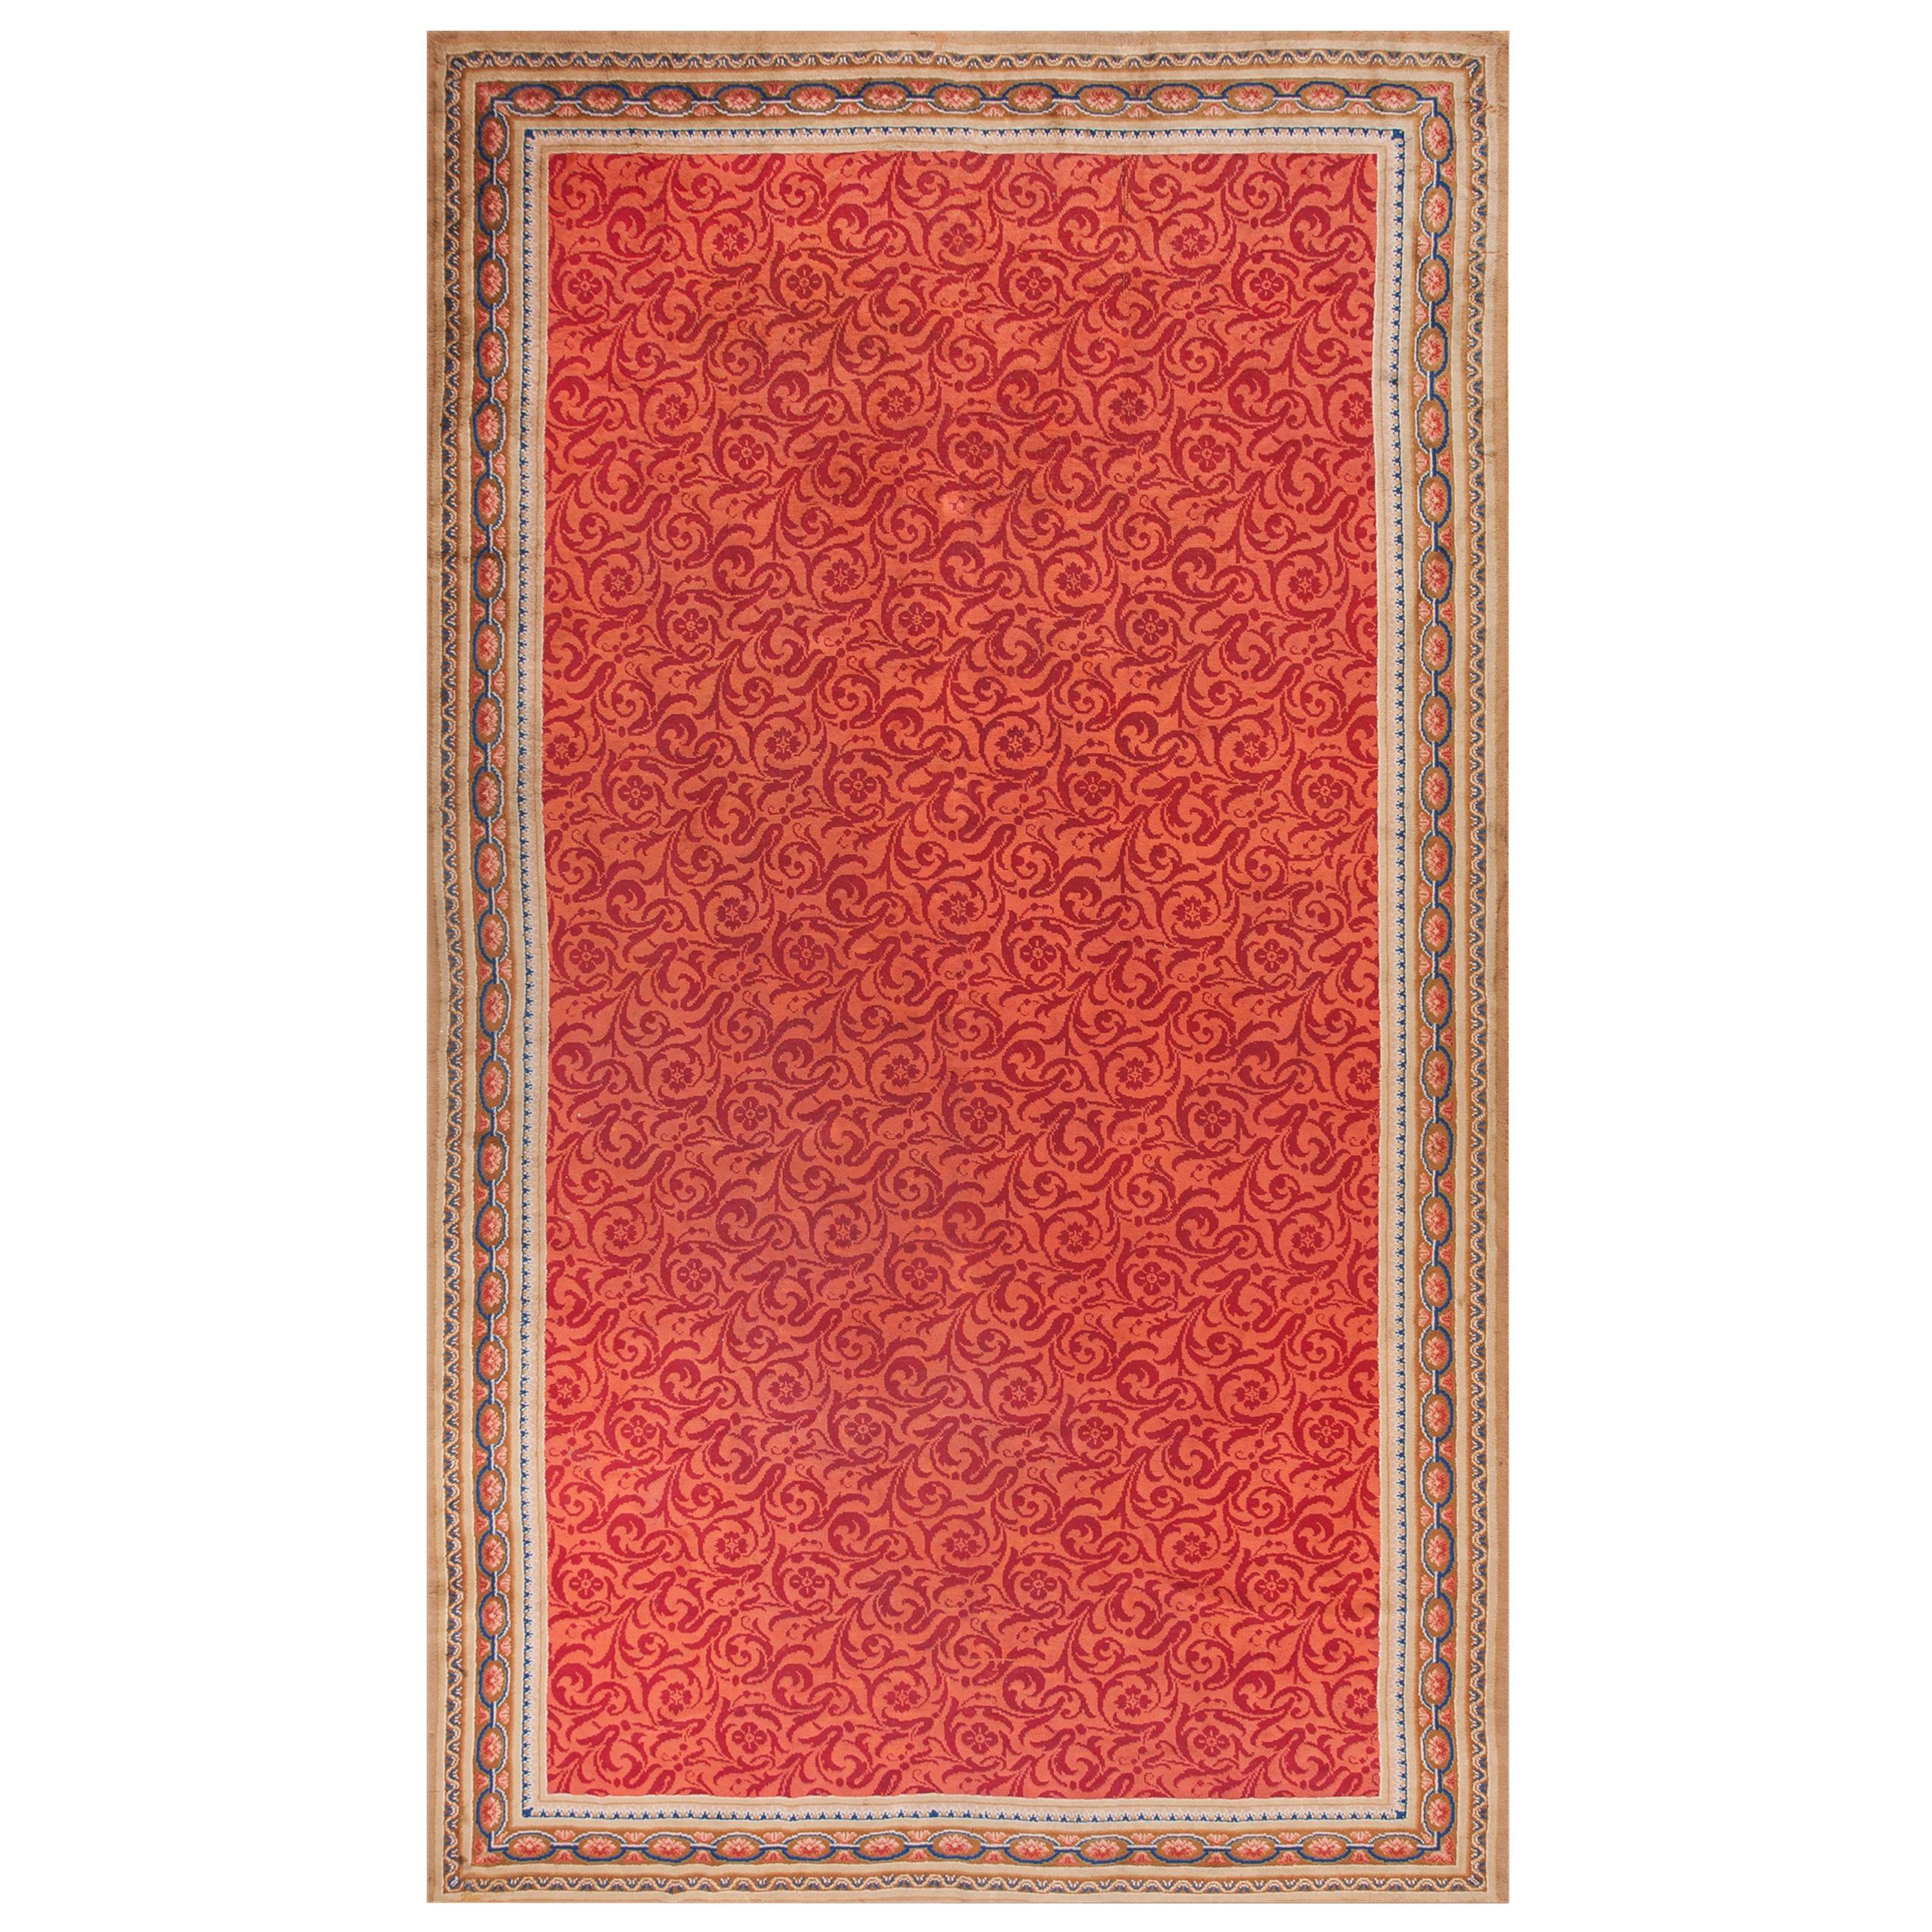 Mid 19th Century English Axminster Carpet ( 9' 8" x 17' - 295 x 520 cm ) 